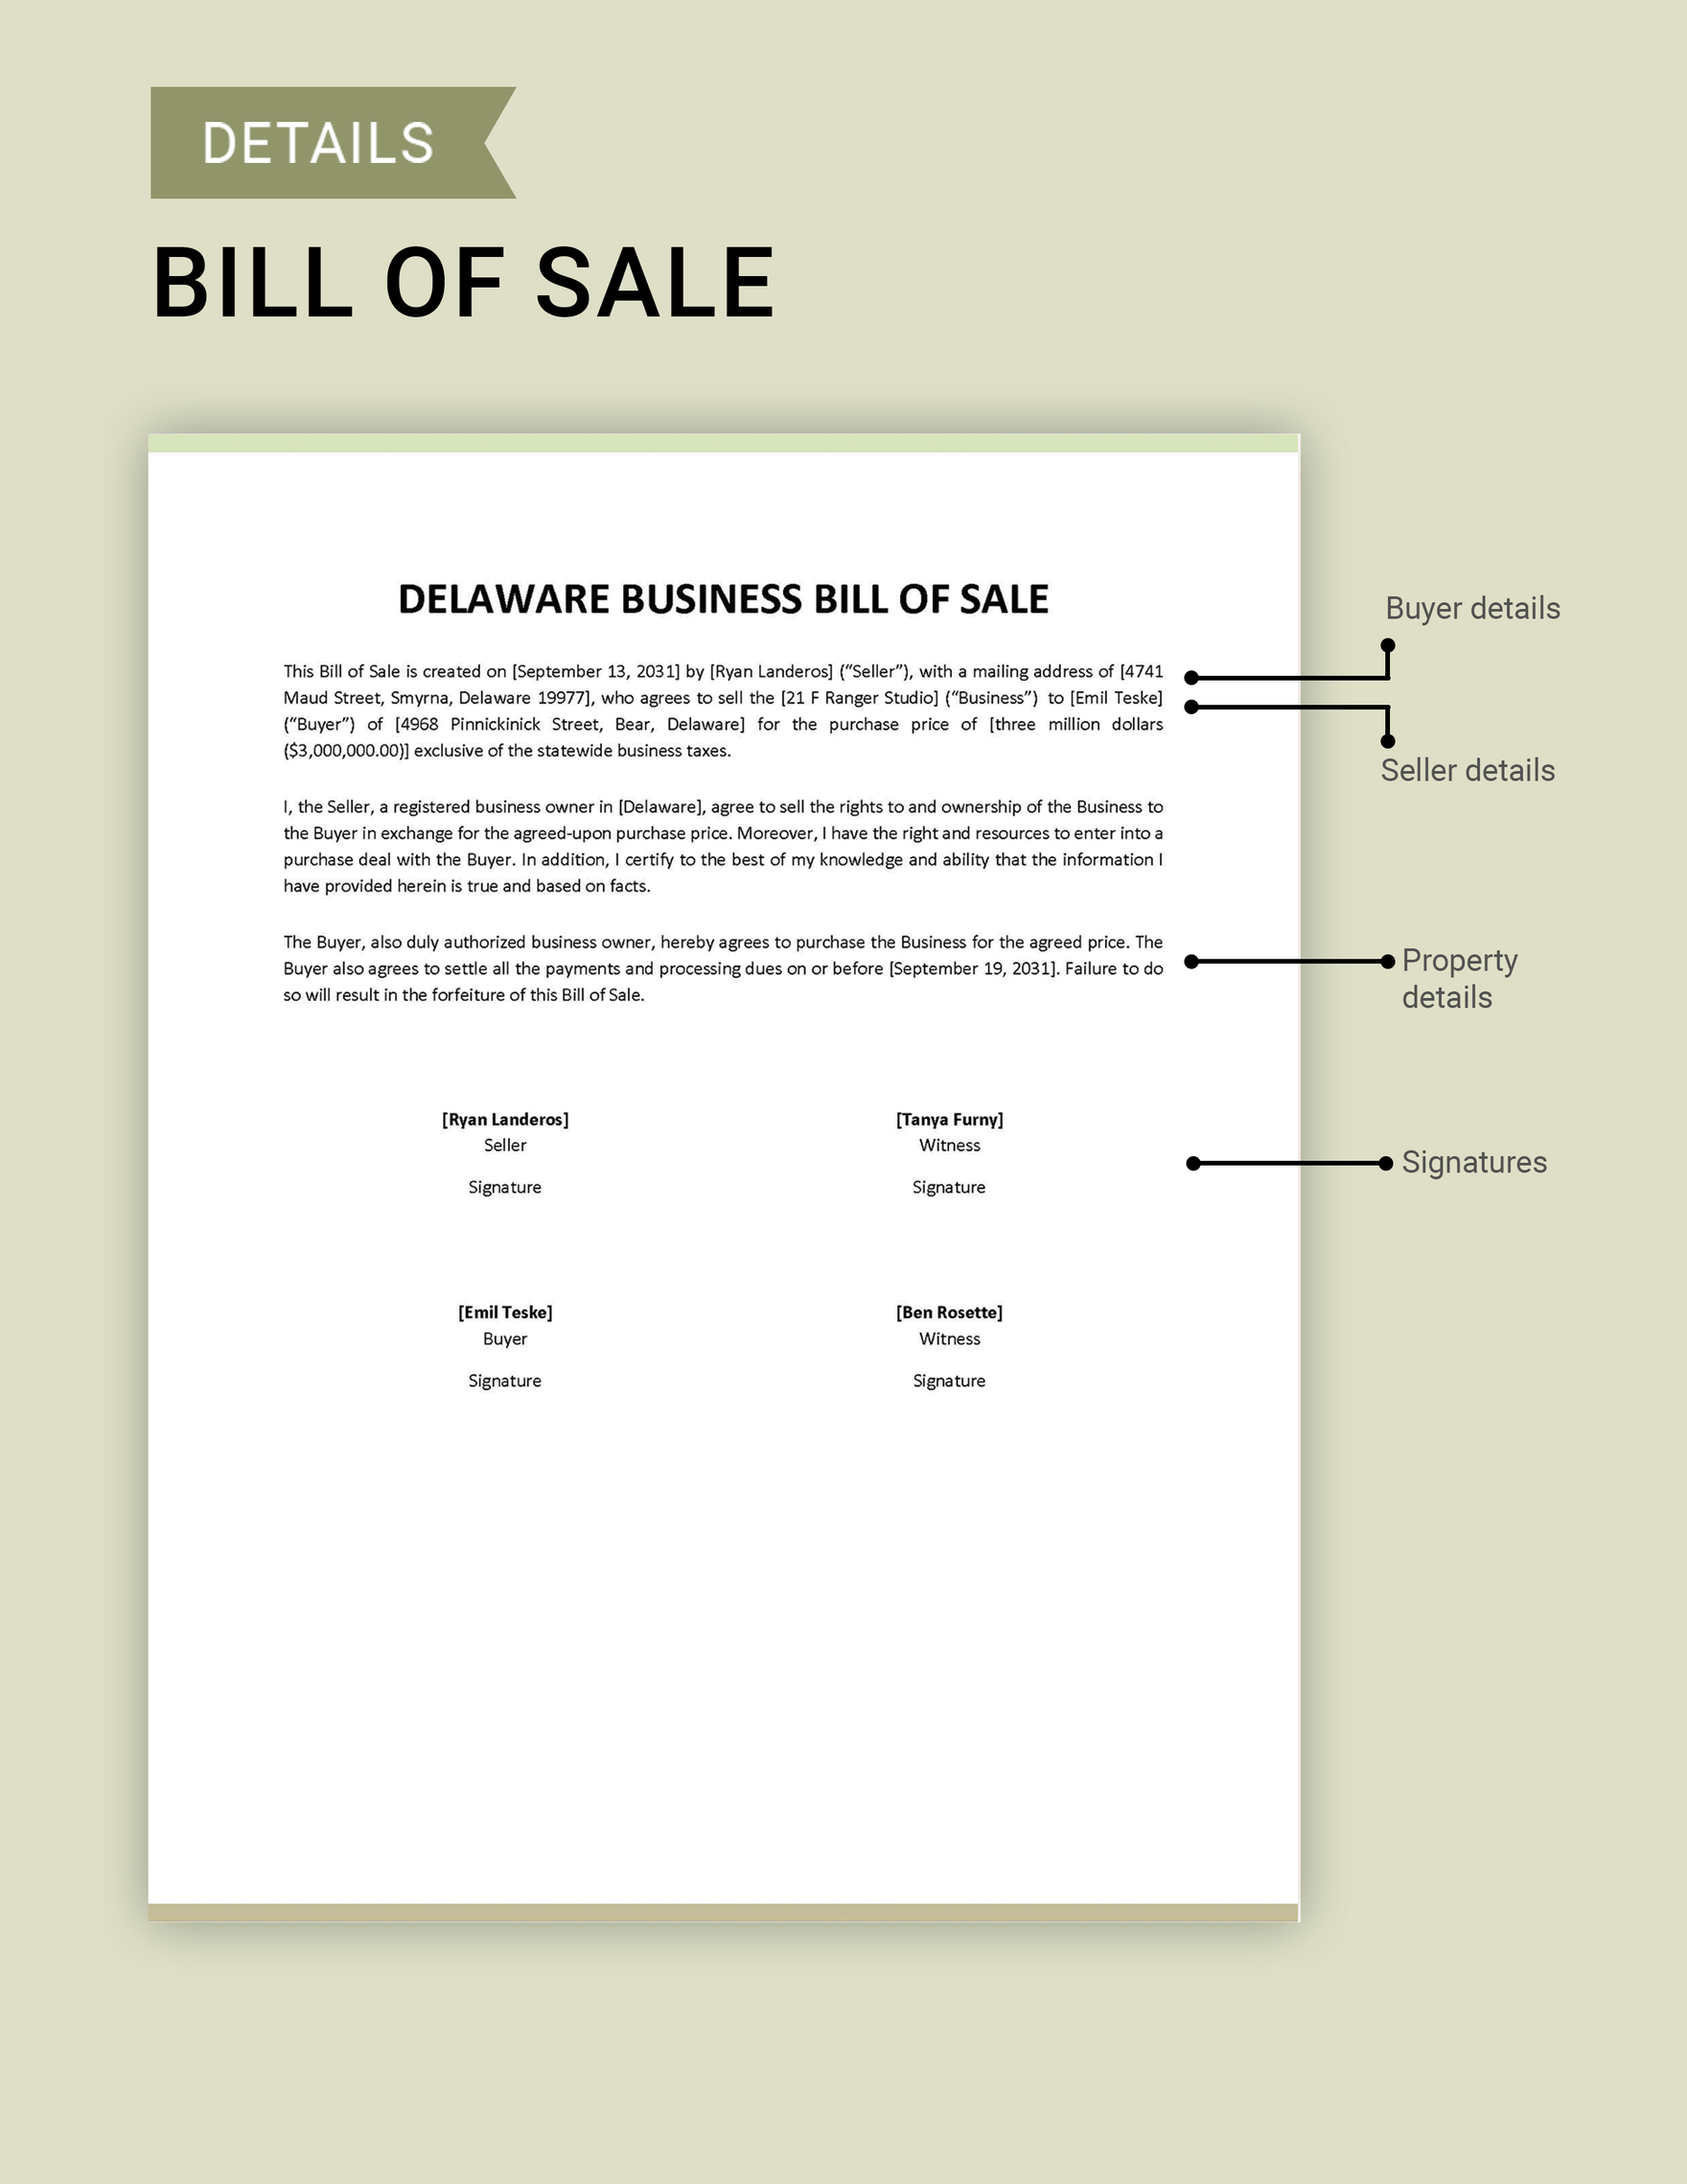 Delaware Business Bill of Sale Template